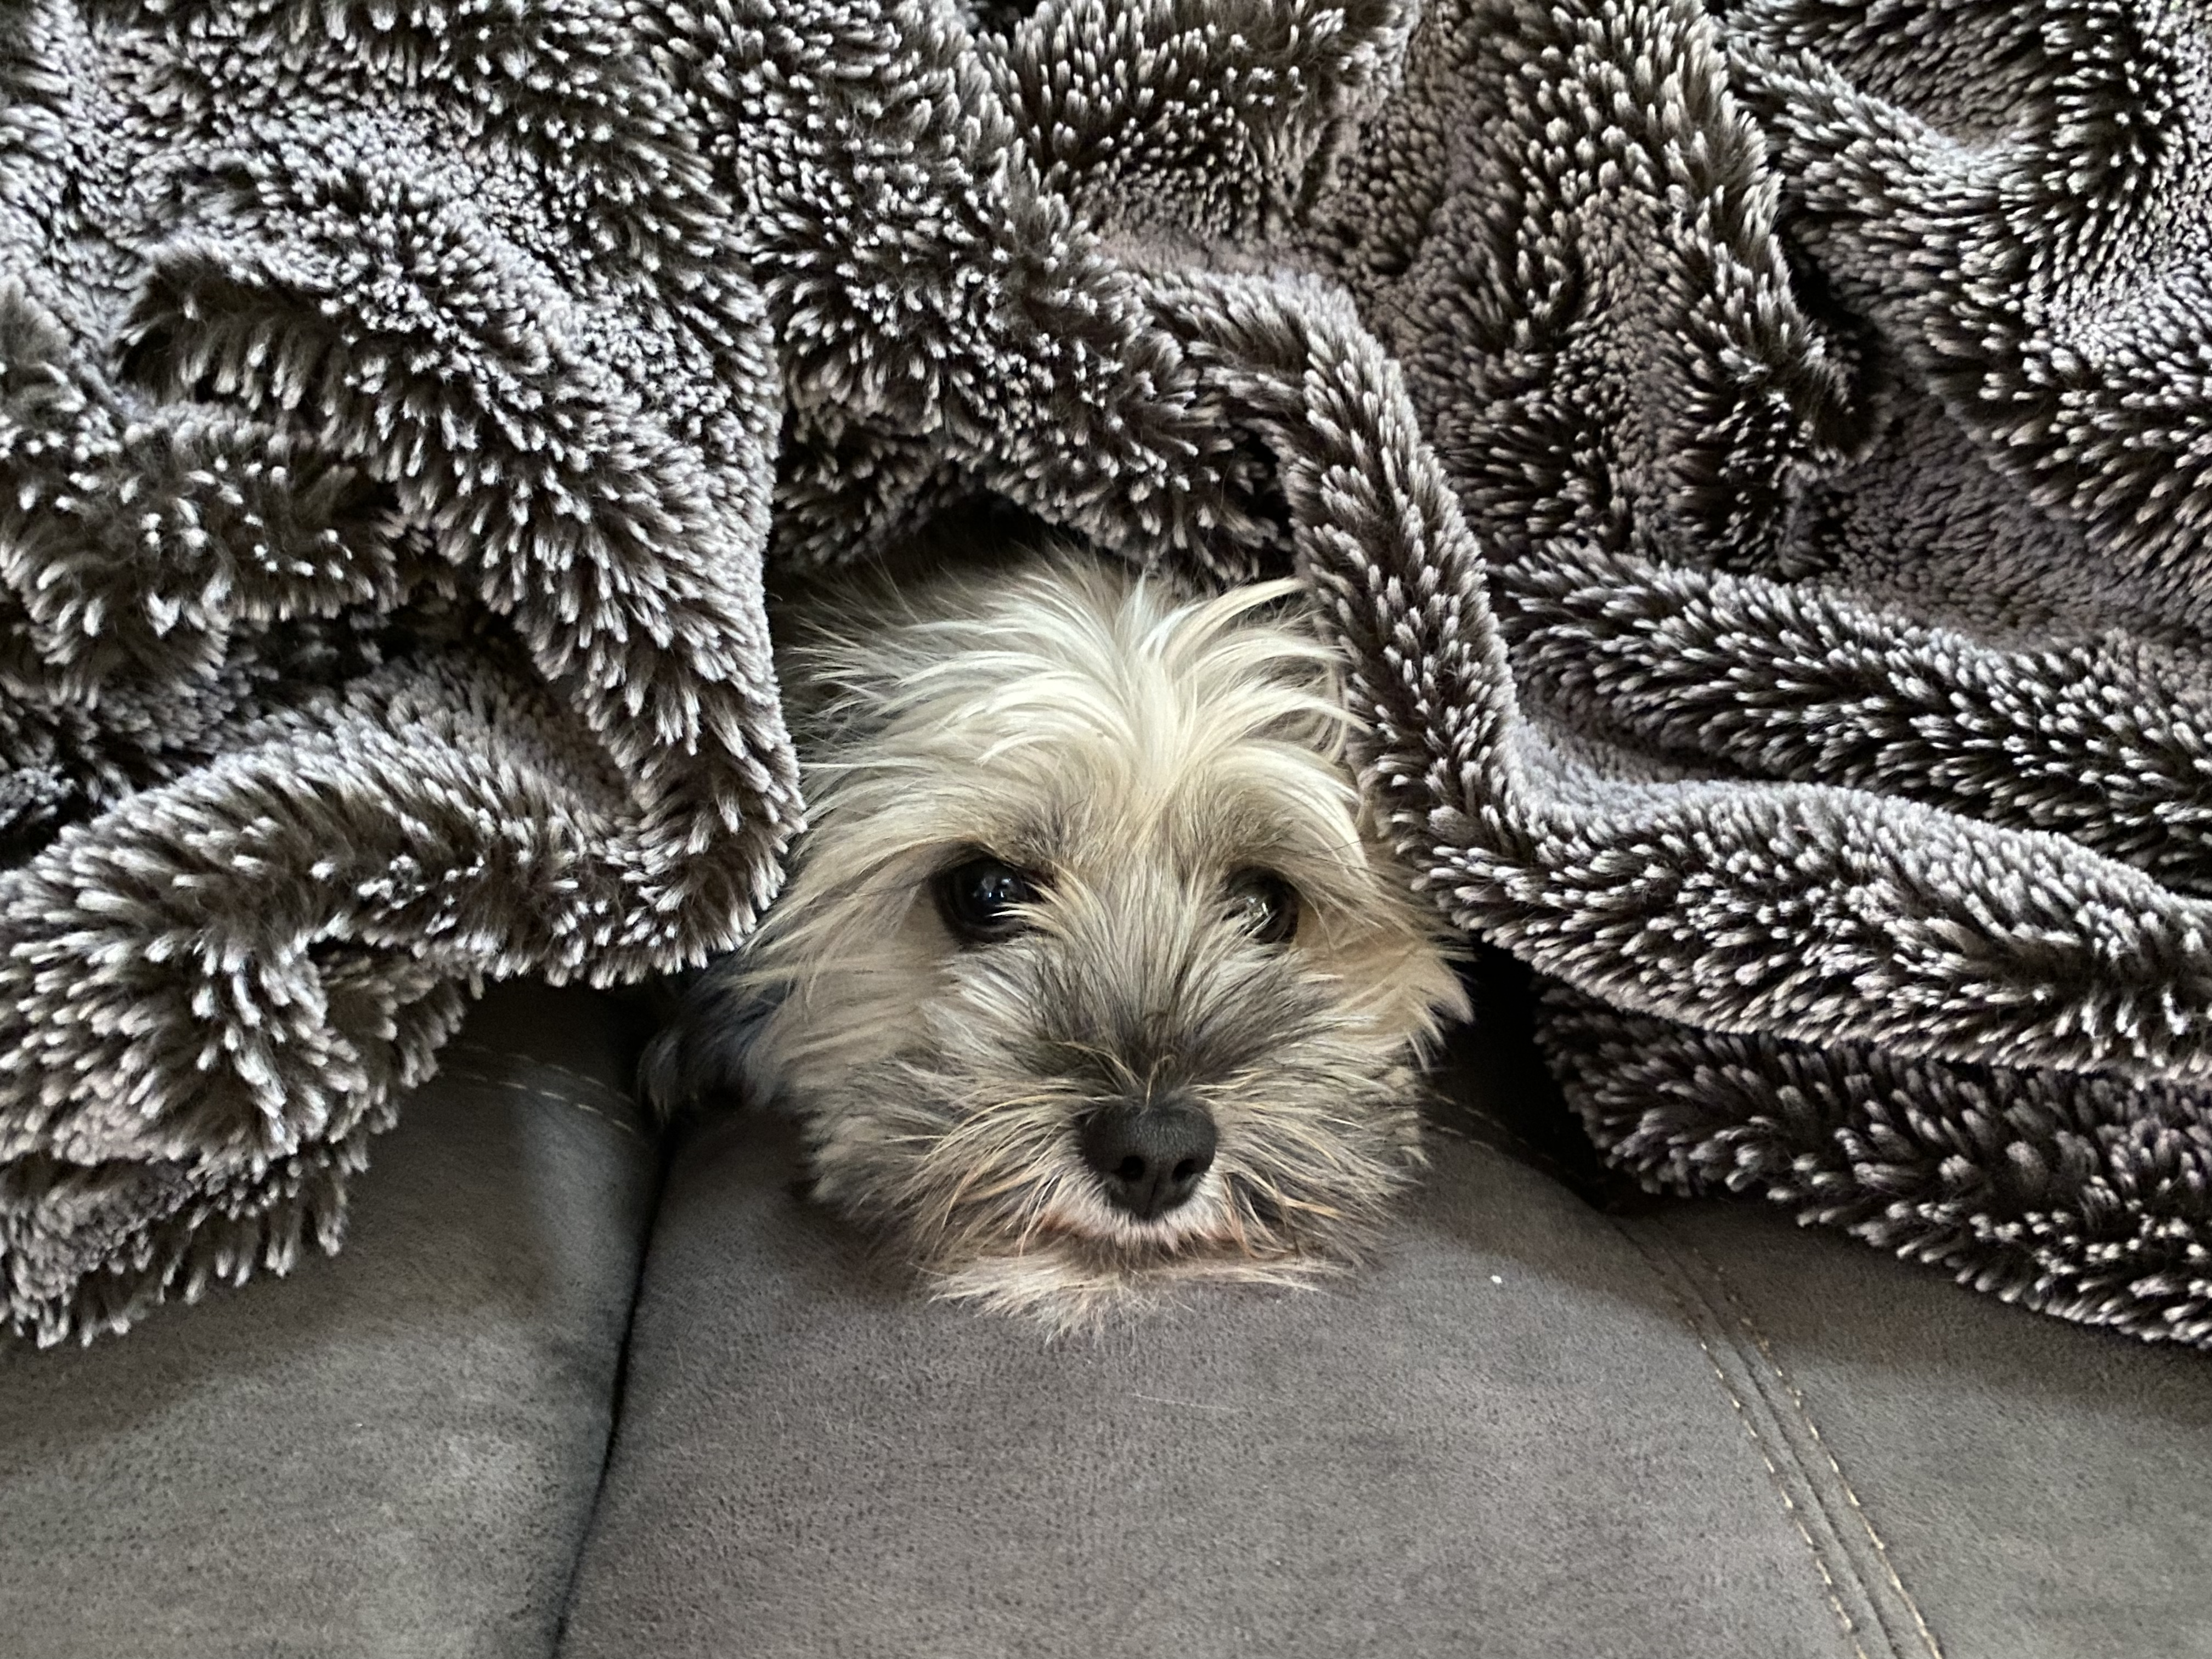 Puppy snuggled under blankets image